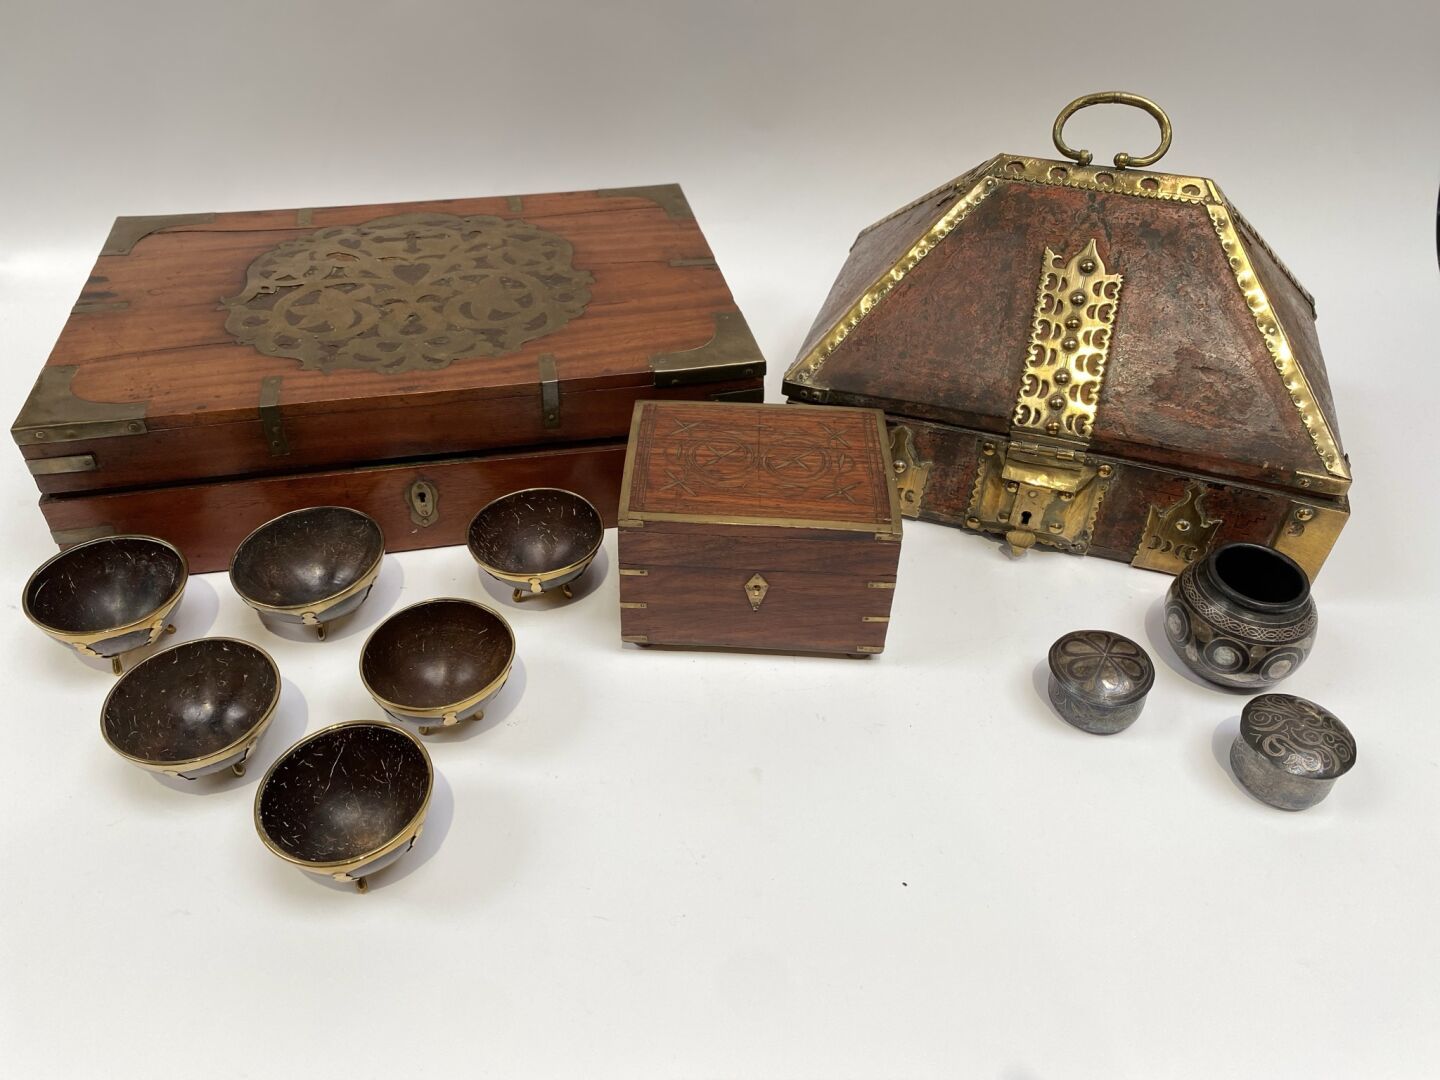 Null 一套旅行纪念品包括三个木制和铜制盒子，六个碗，两个微型盒子，一个小花瓶和一个黑色釉面陶瓷花瓶。